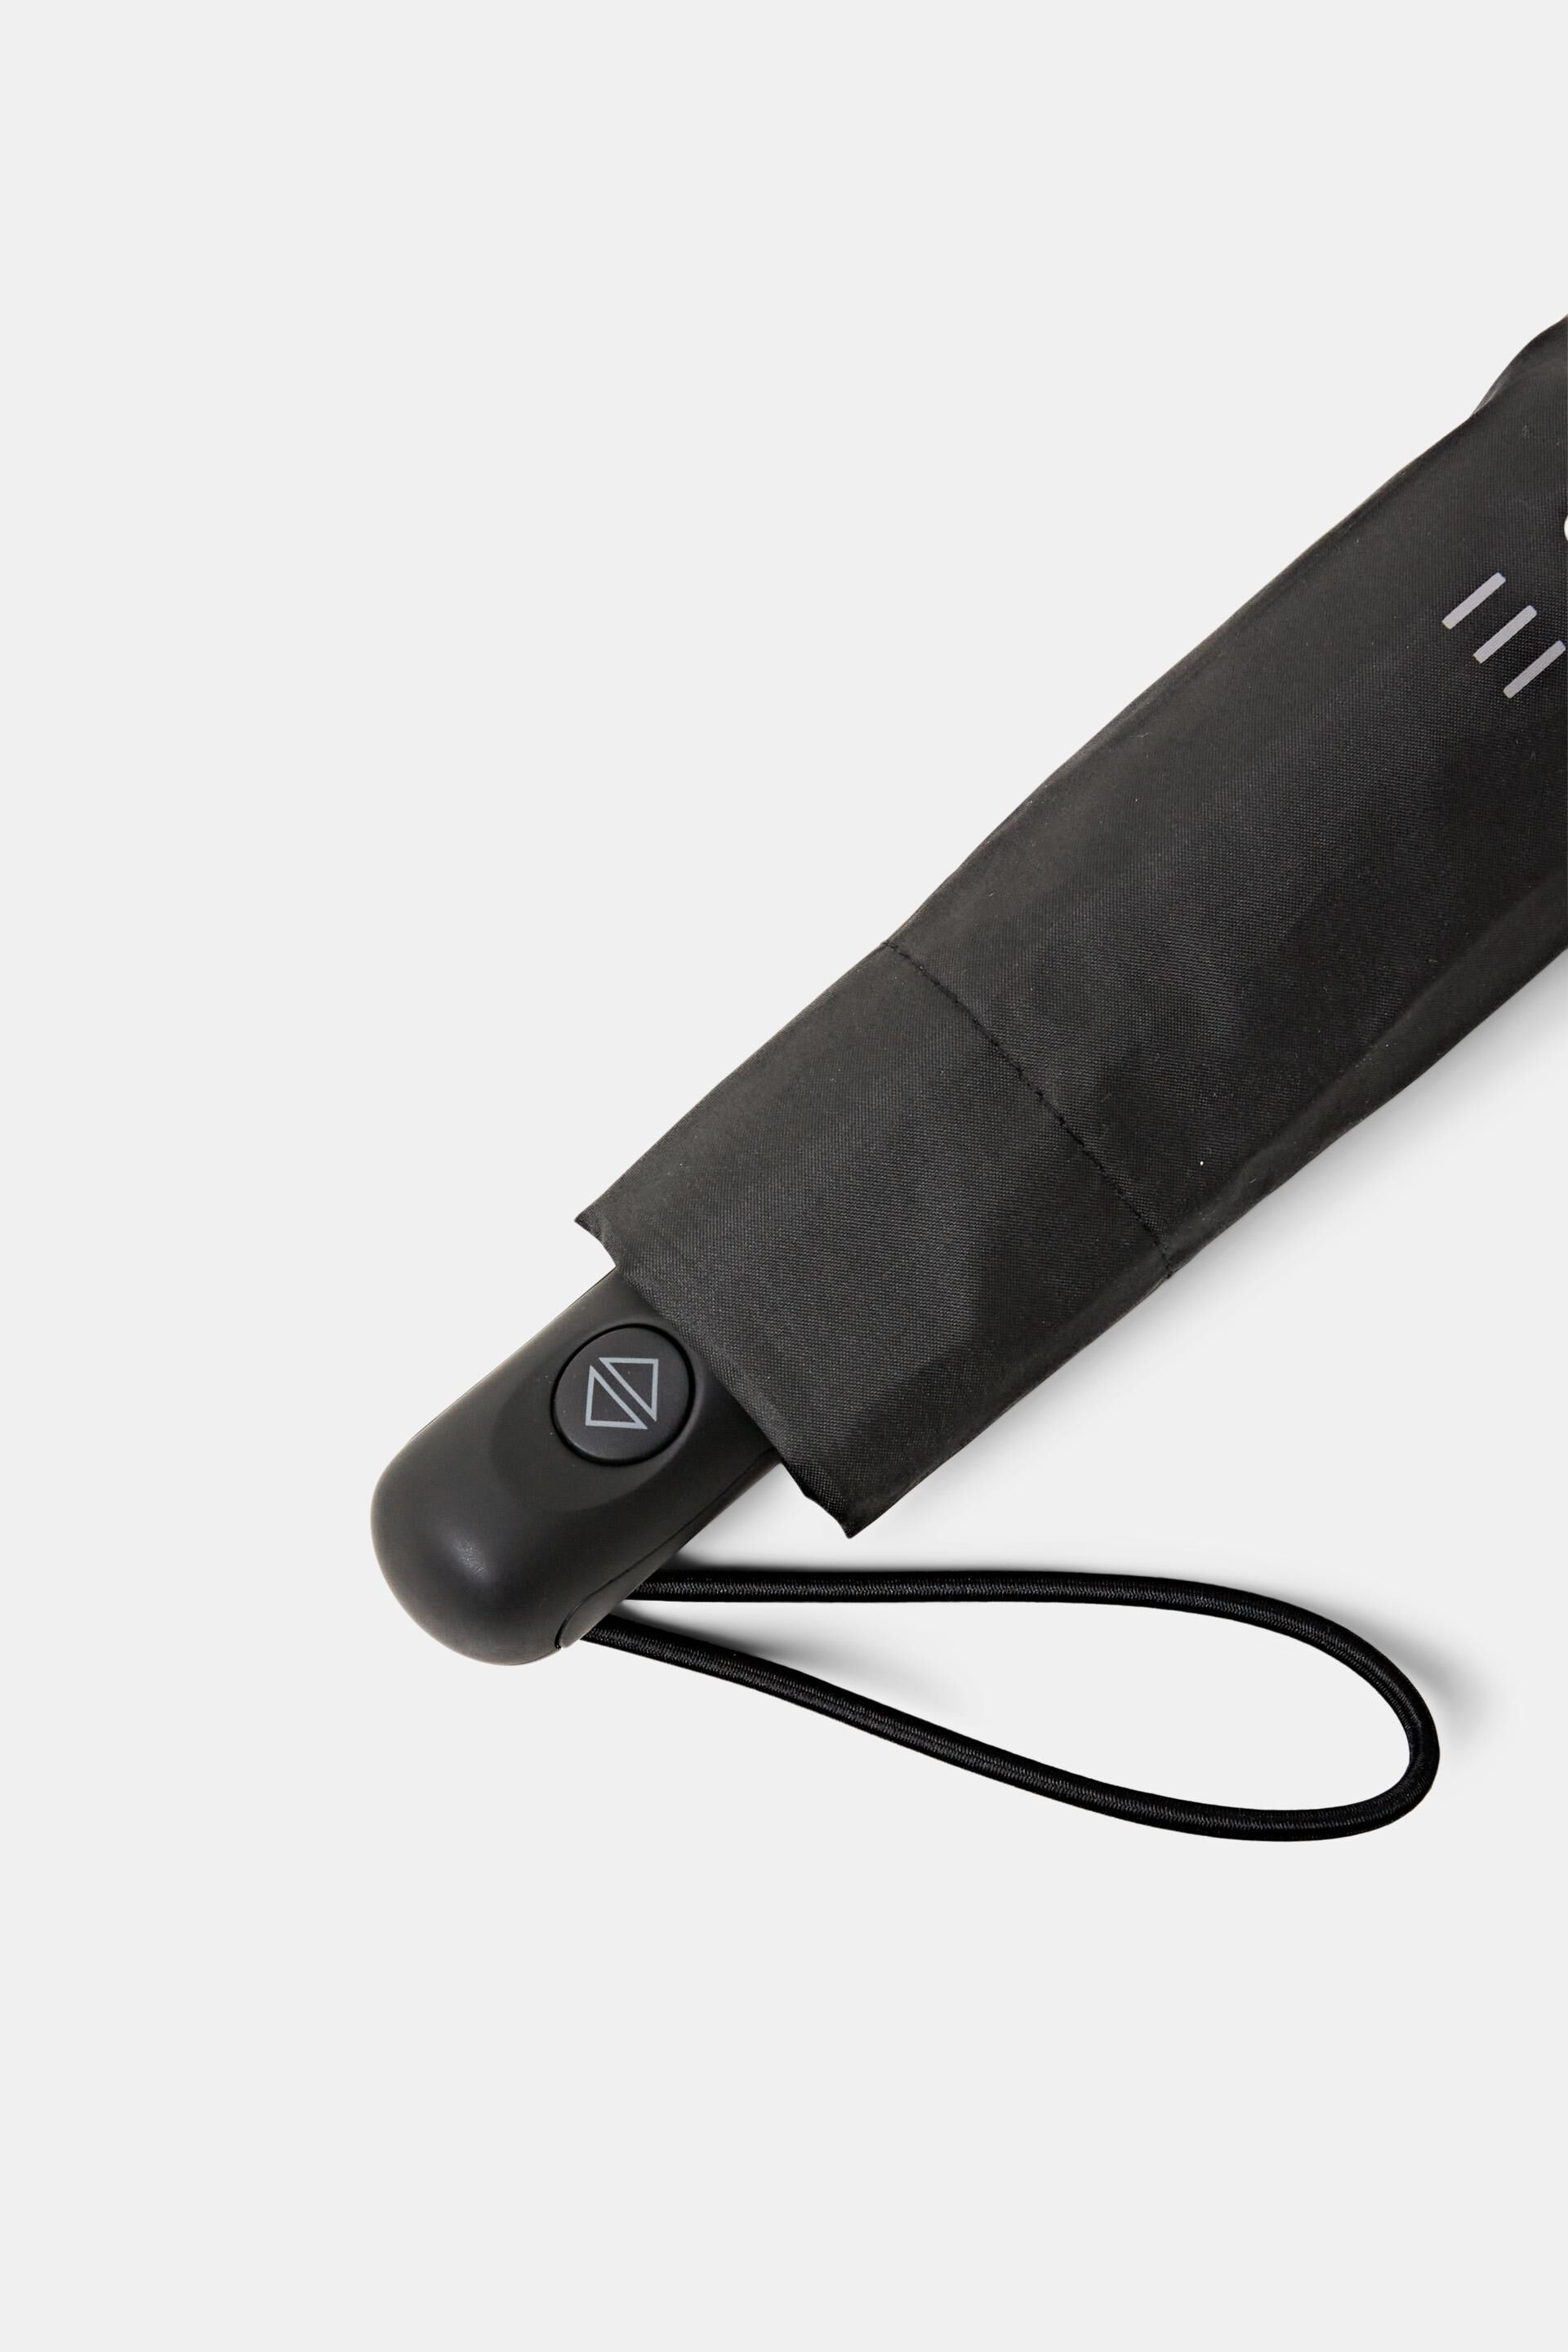 Esprit umbrella pocket Easymatic in black slimline